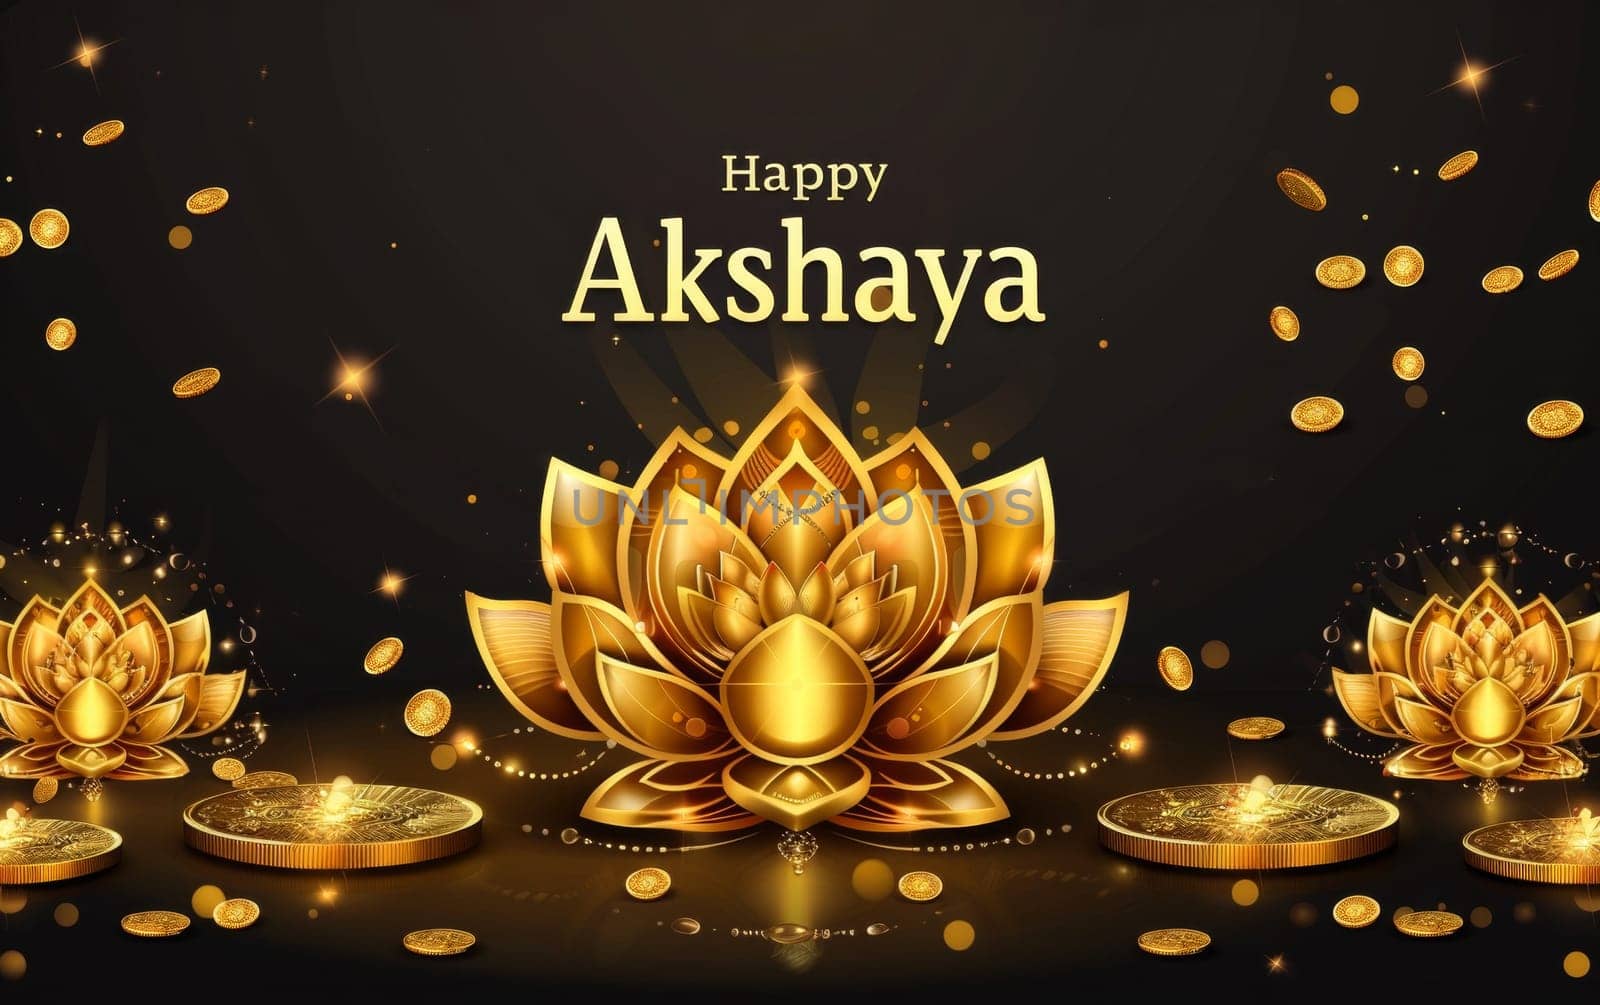 Celebratory image for Akshaya Tritiya showcasing a lotus and falling gold coins, symbolizing eternal wealth in Hindu culture. by sfinks